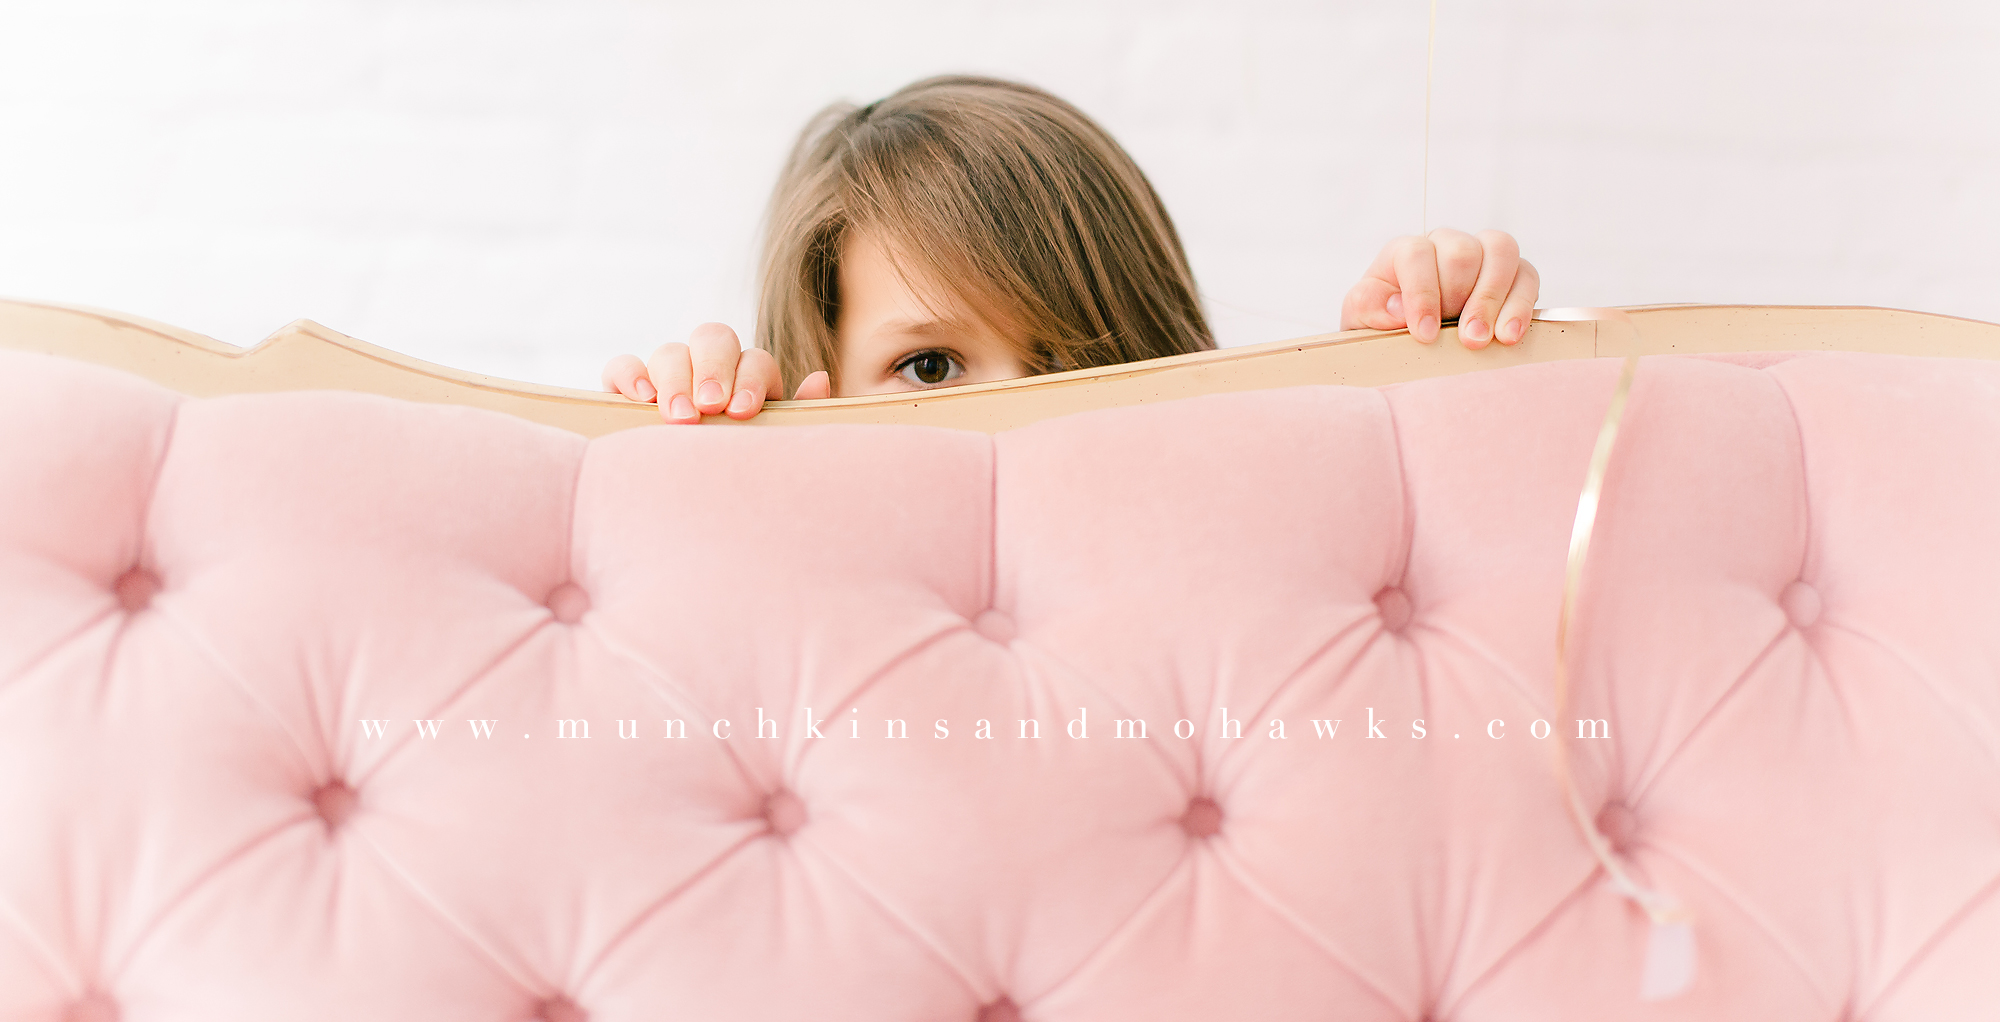 har-pink-couch-blog2wm